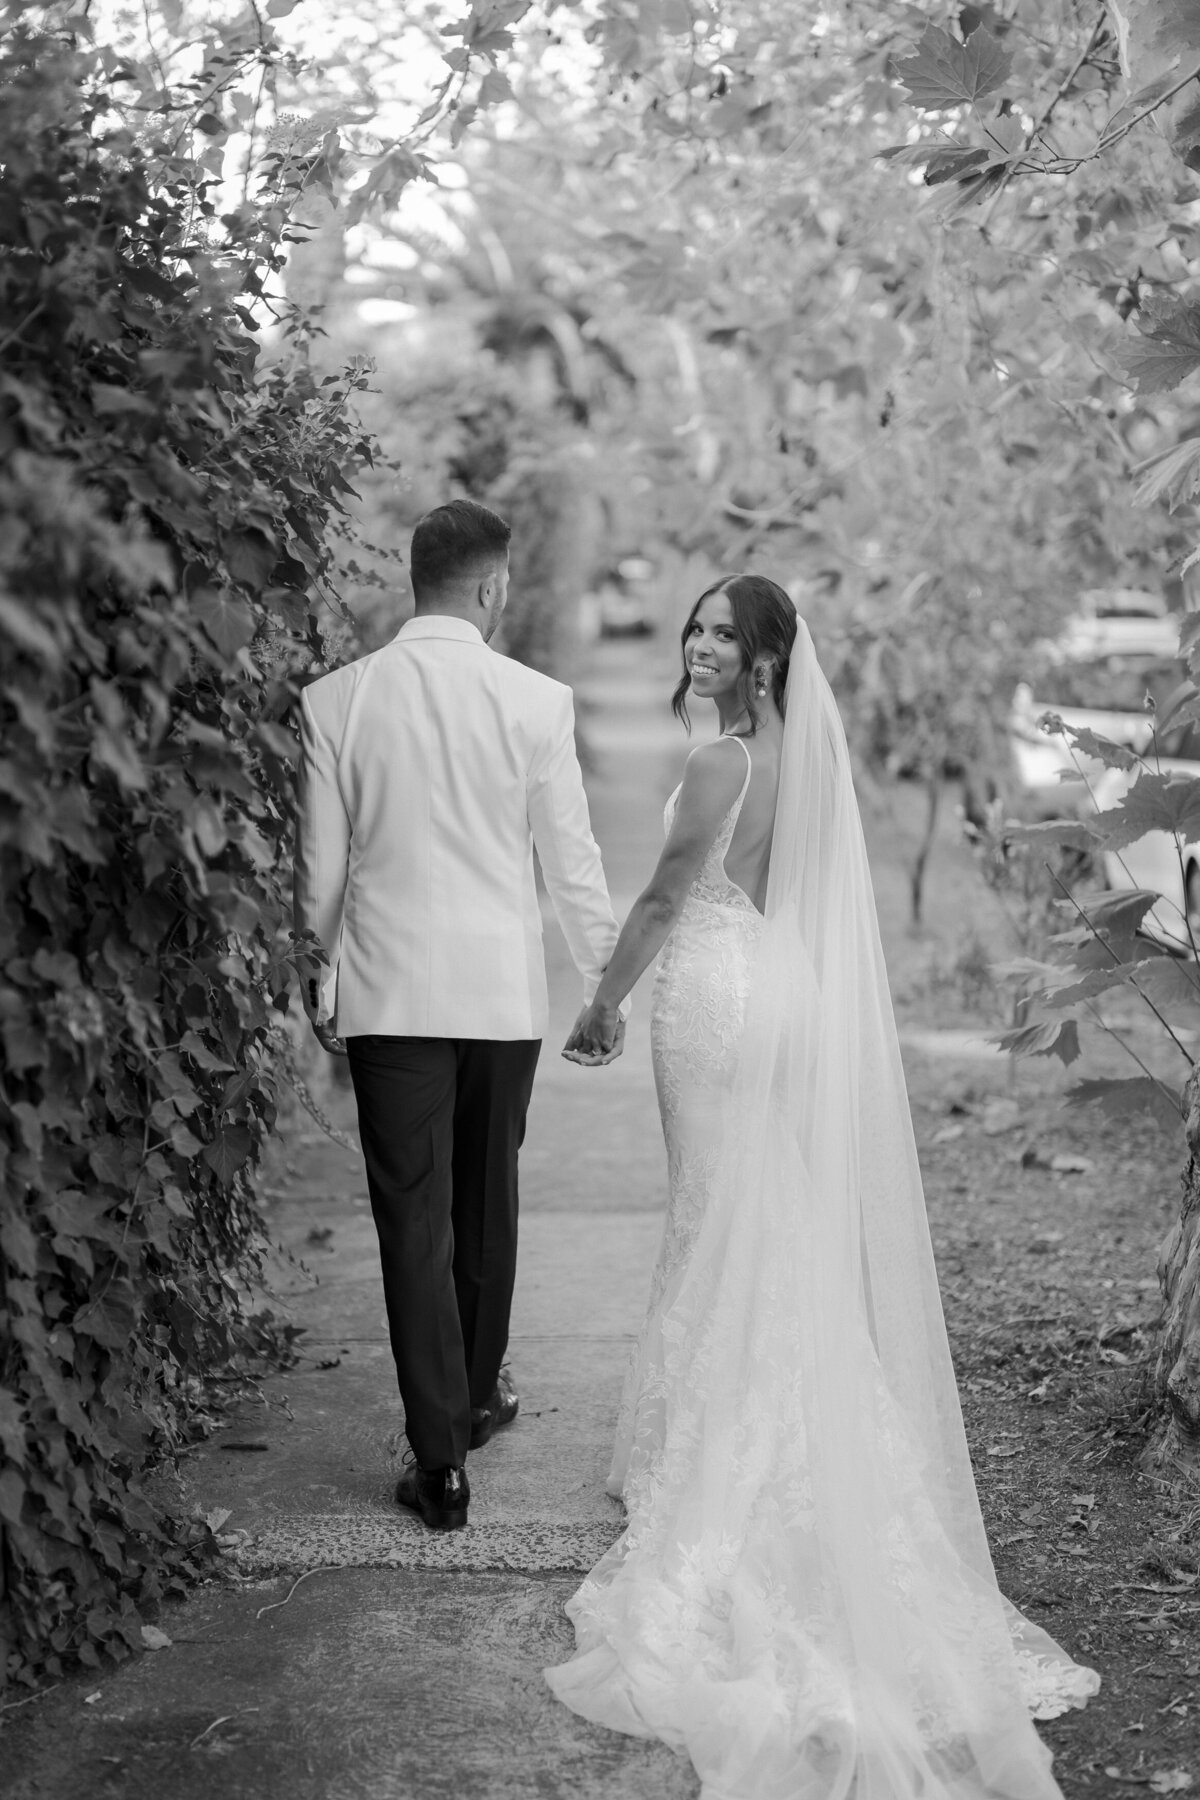 Karina & Daniel Quat Quatta Melbourne Wedding Photography_167